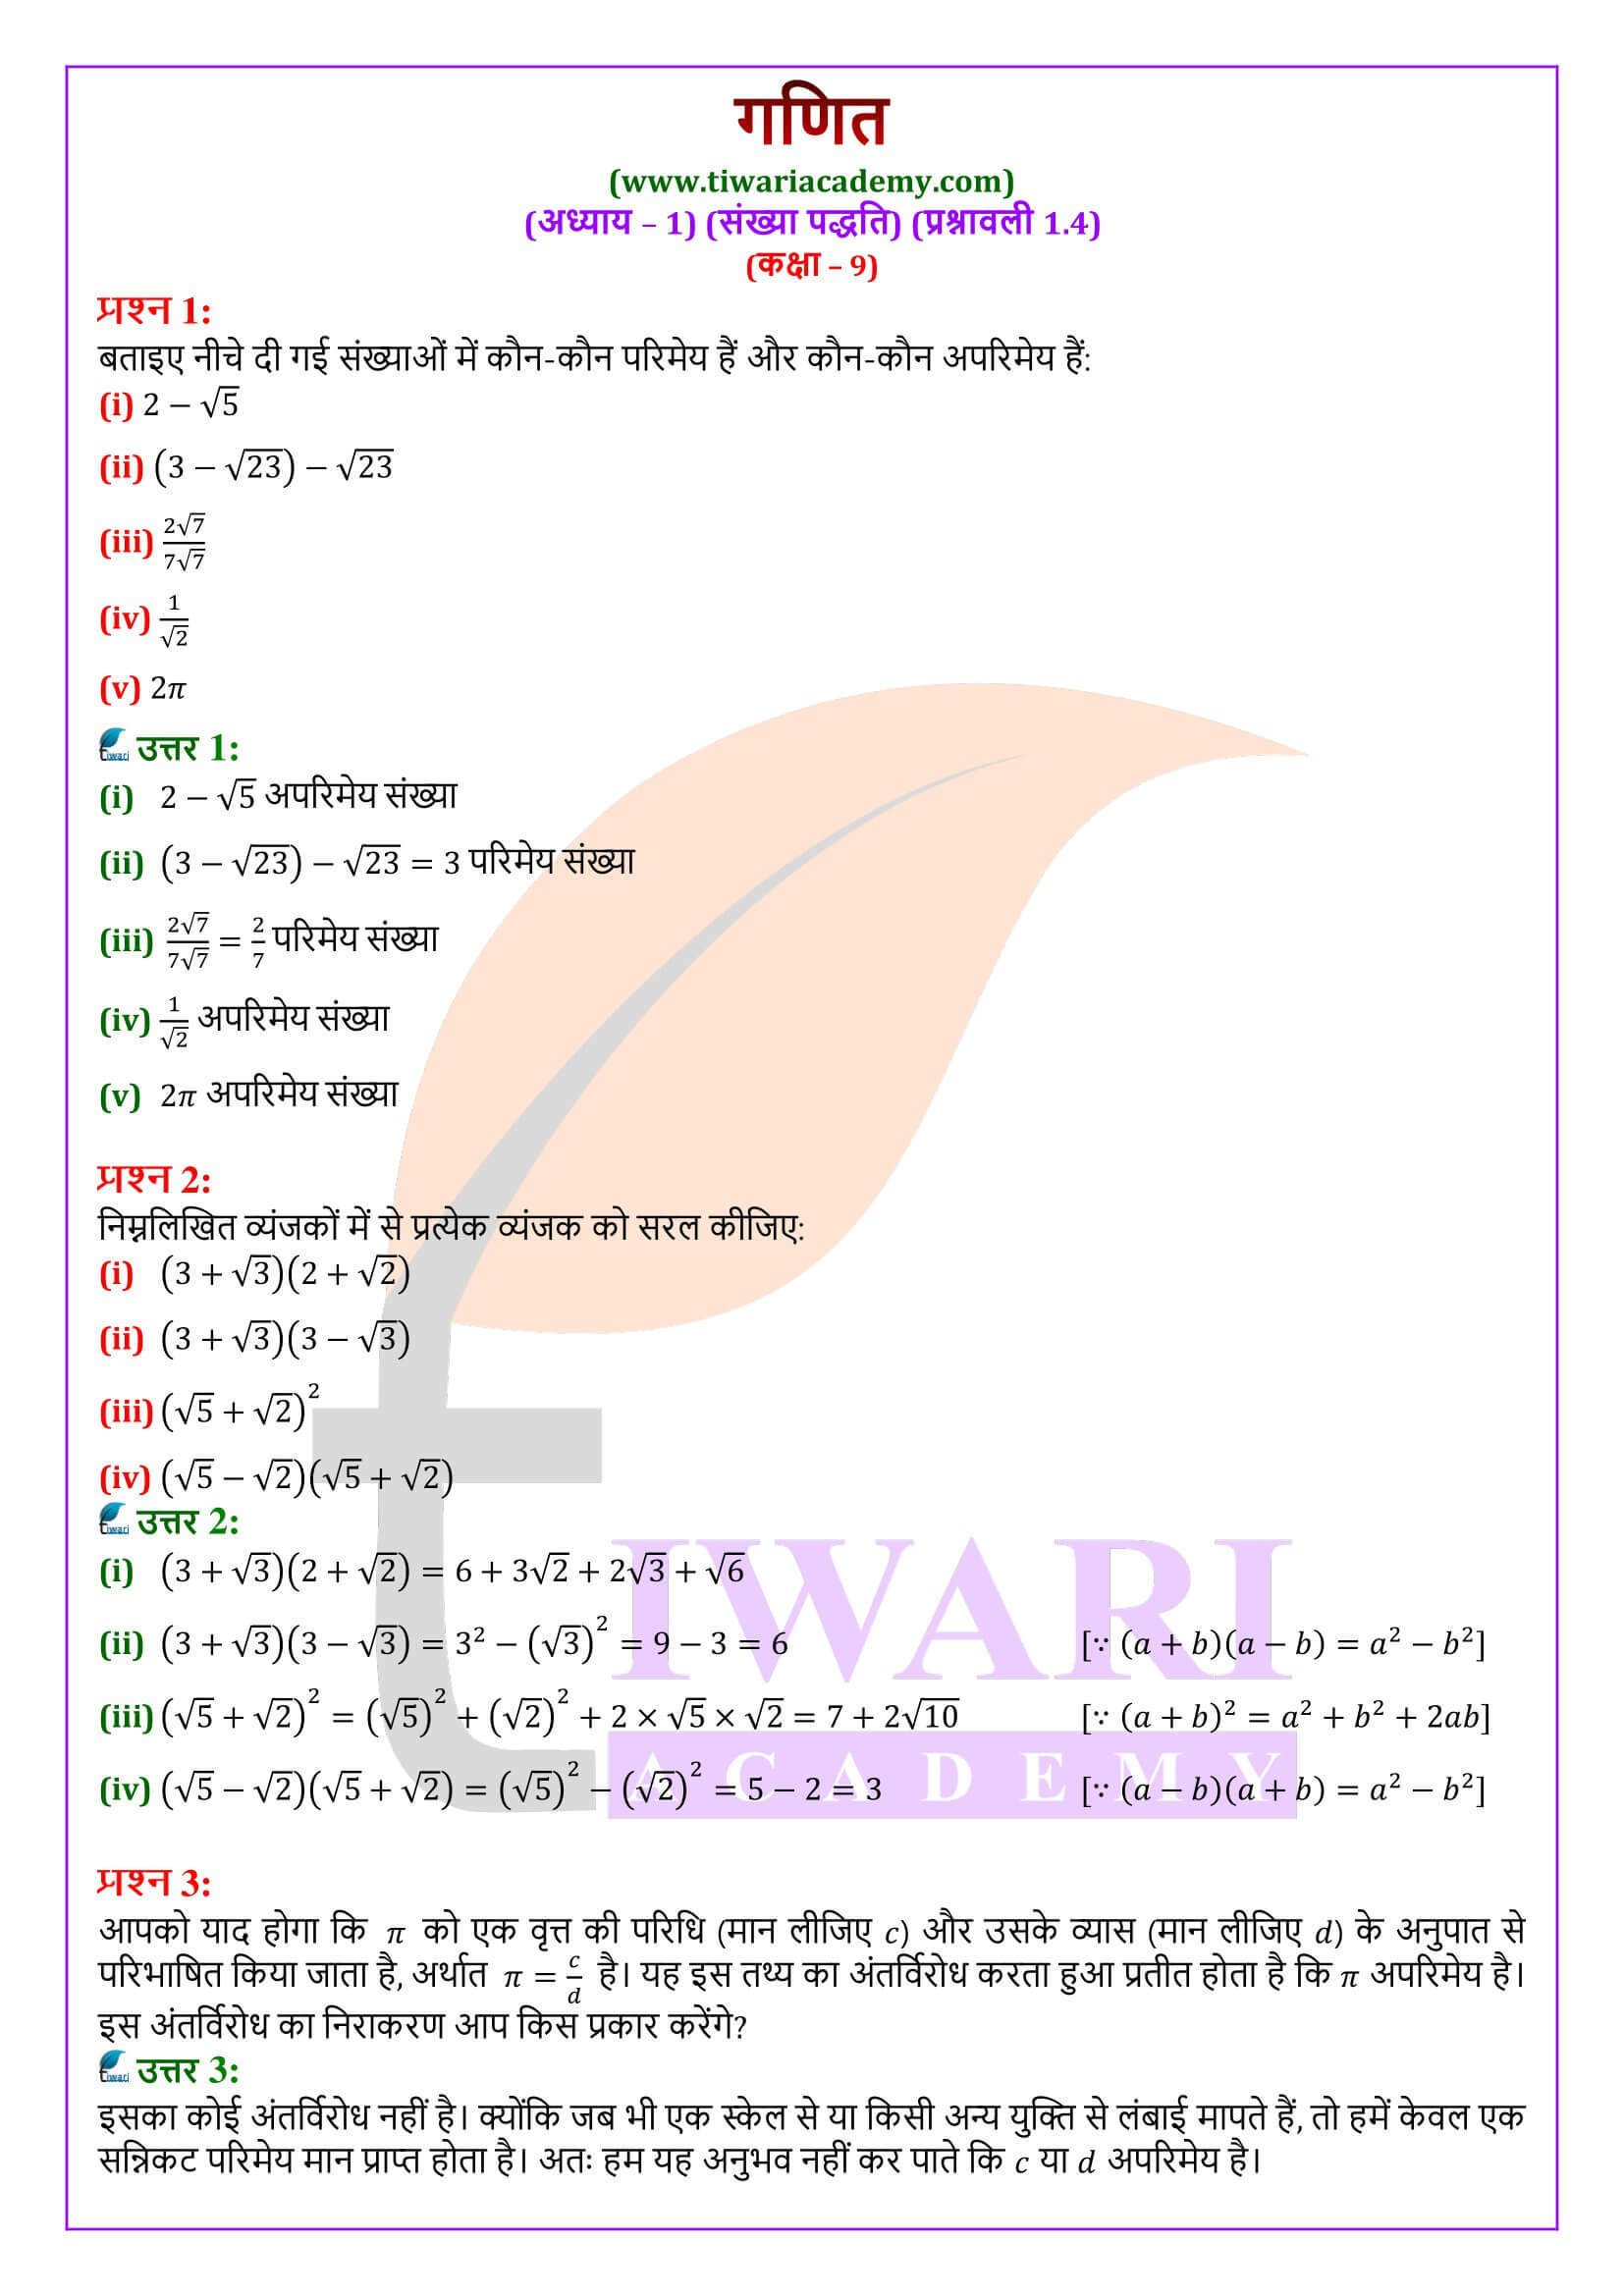 कक्षा 9 गणित अध्याय 1 प्रश्नावली 1.4 के लिए एनसीईआरटी समाधान